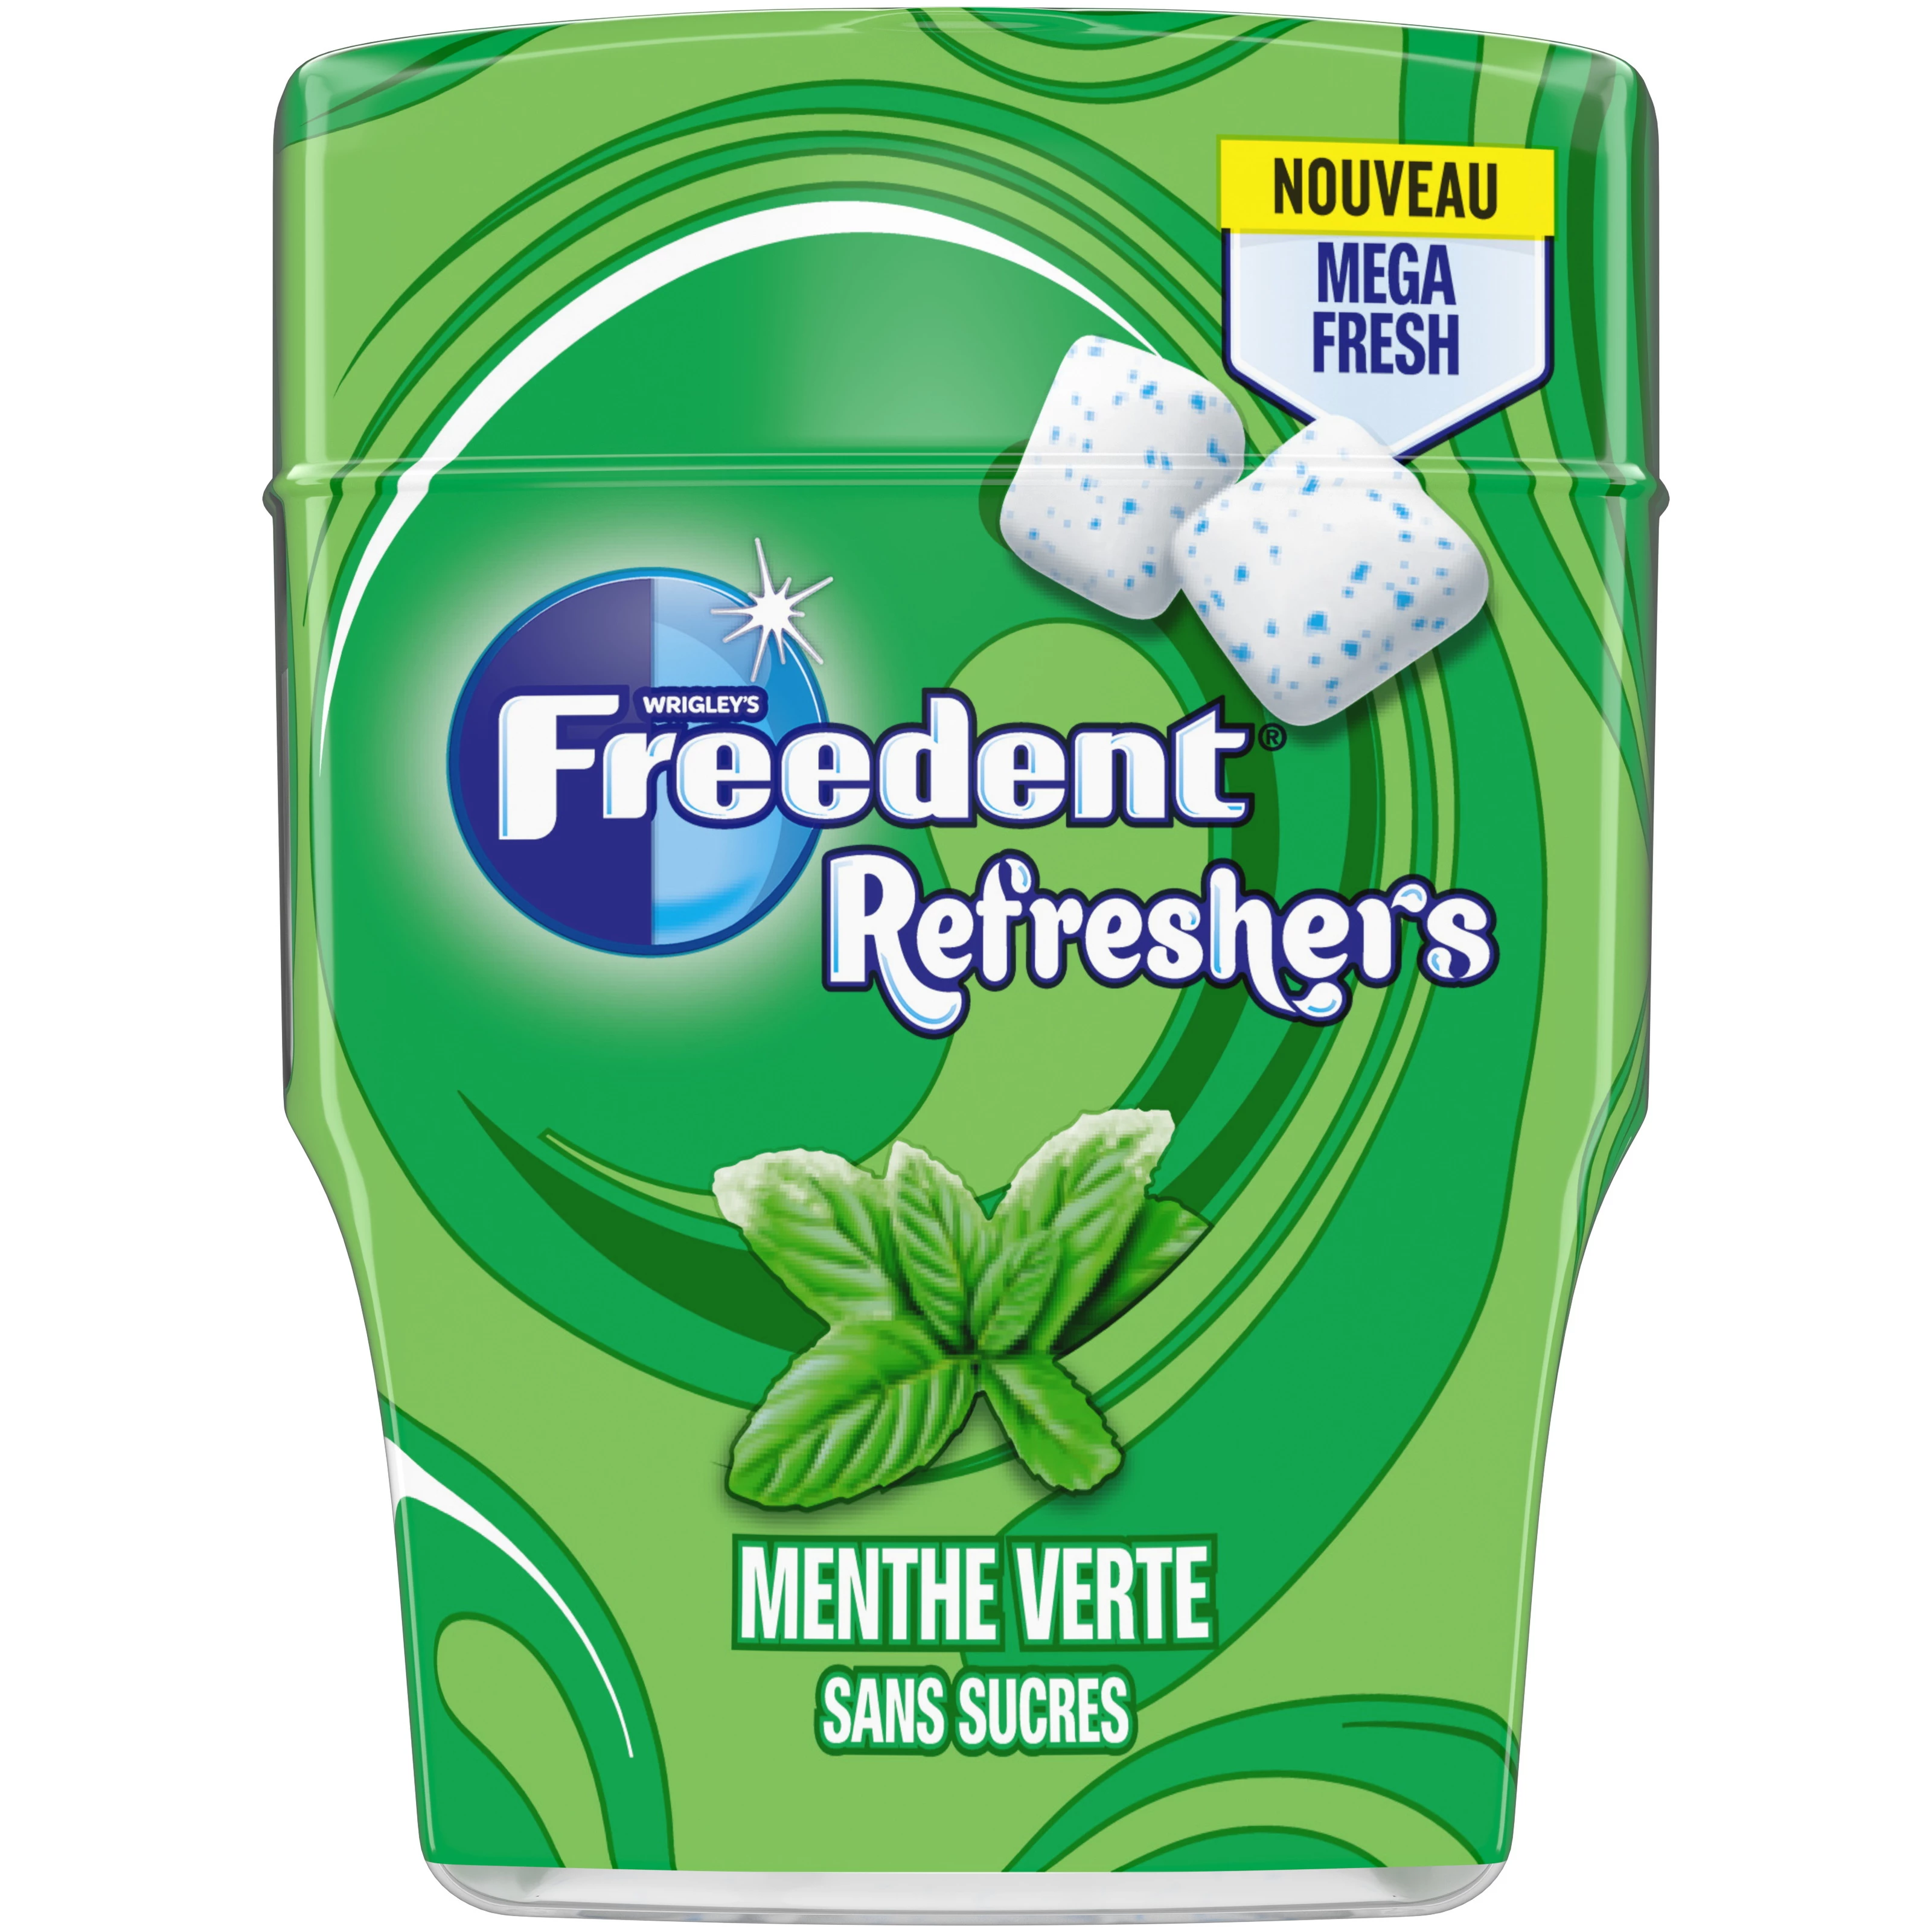 Refresher Dragées Menthe Verte; 67g - FREEDENT